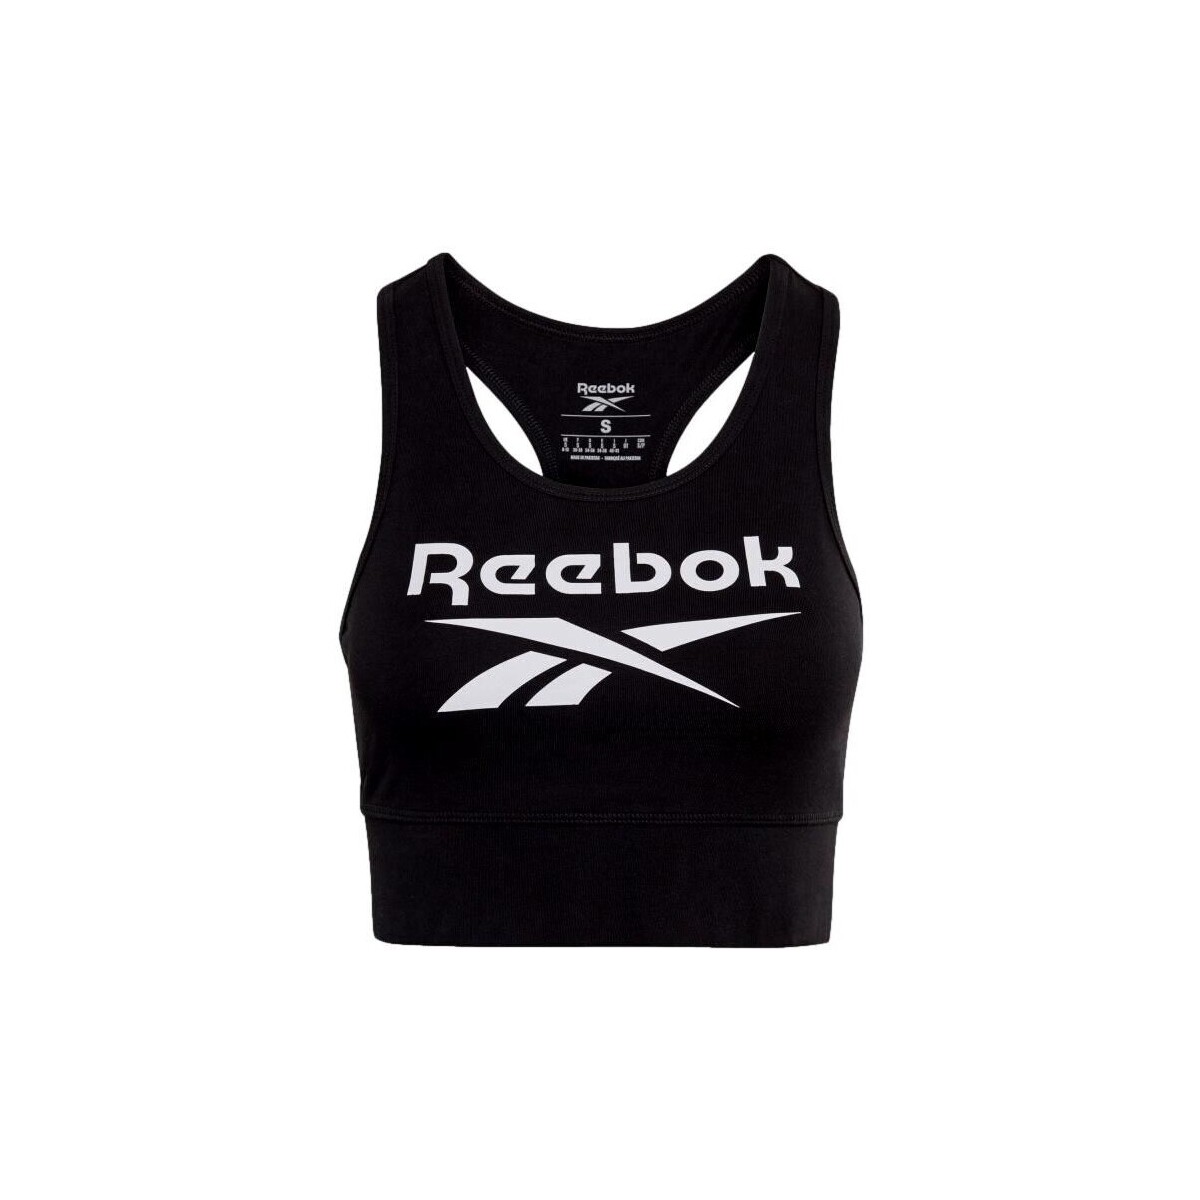 Ruhák Női Pólók / Galléros Pólók Reebok Sport TOP MUJER DEPOTTIVO  GL2544 Fekete 